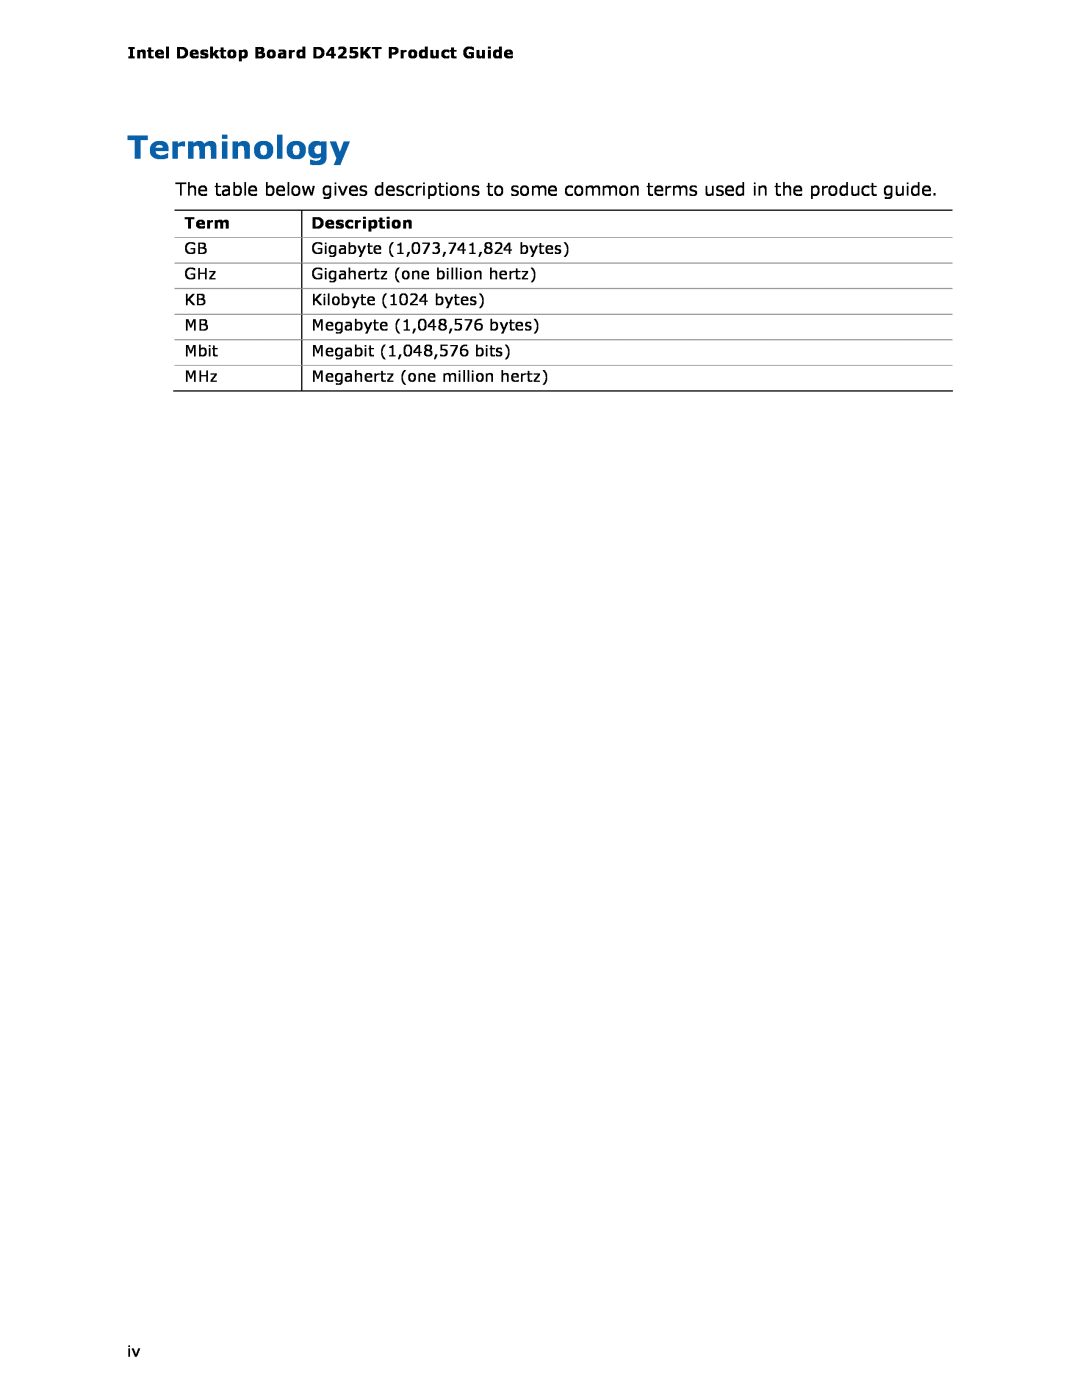 Intel manual Terminology, Intel Desktop Board D425KT Product Guide, Description 